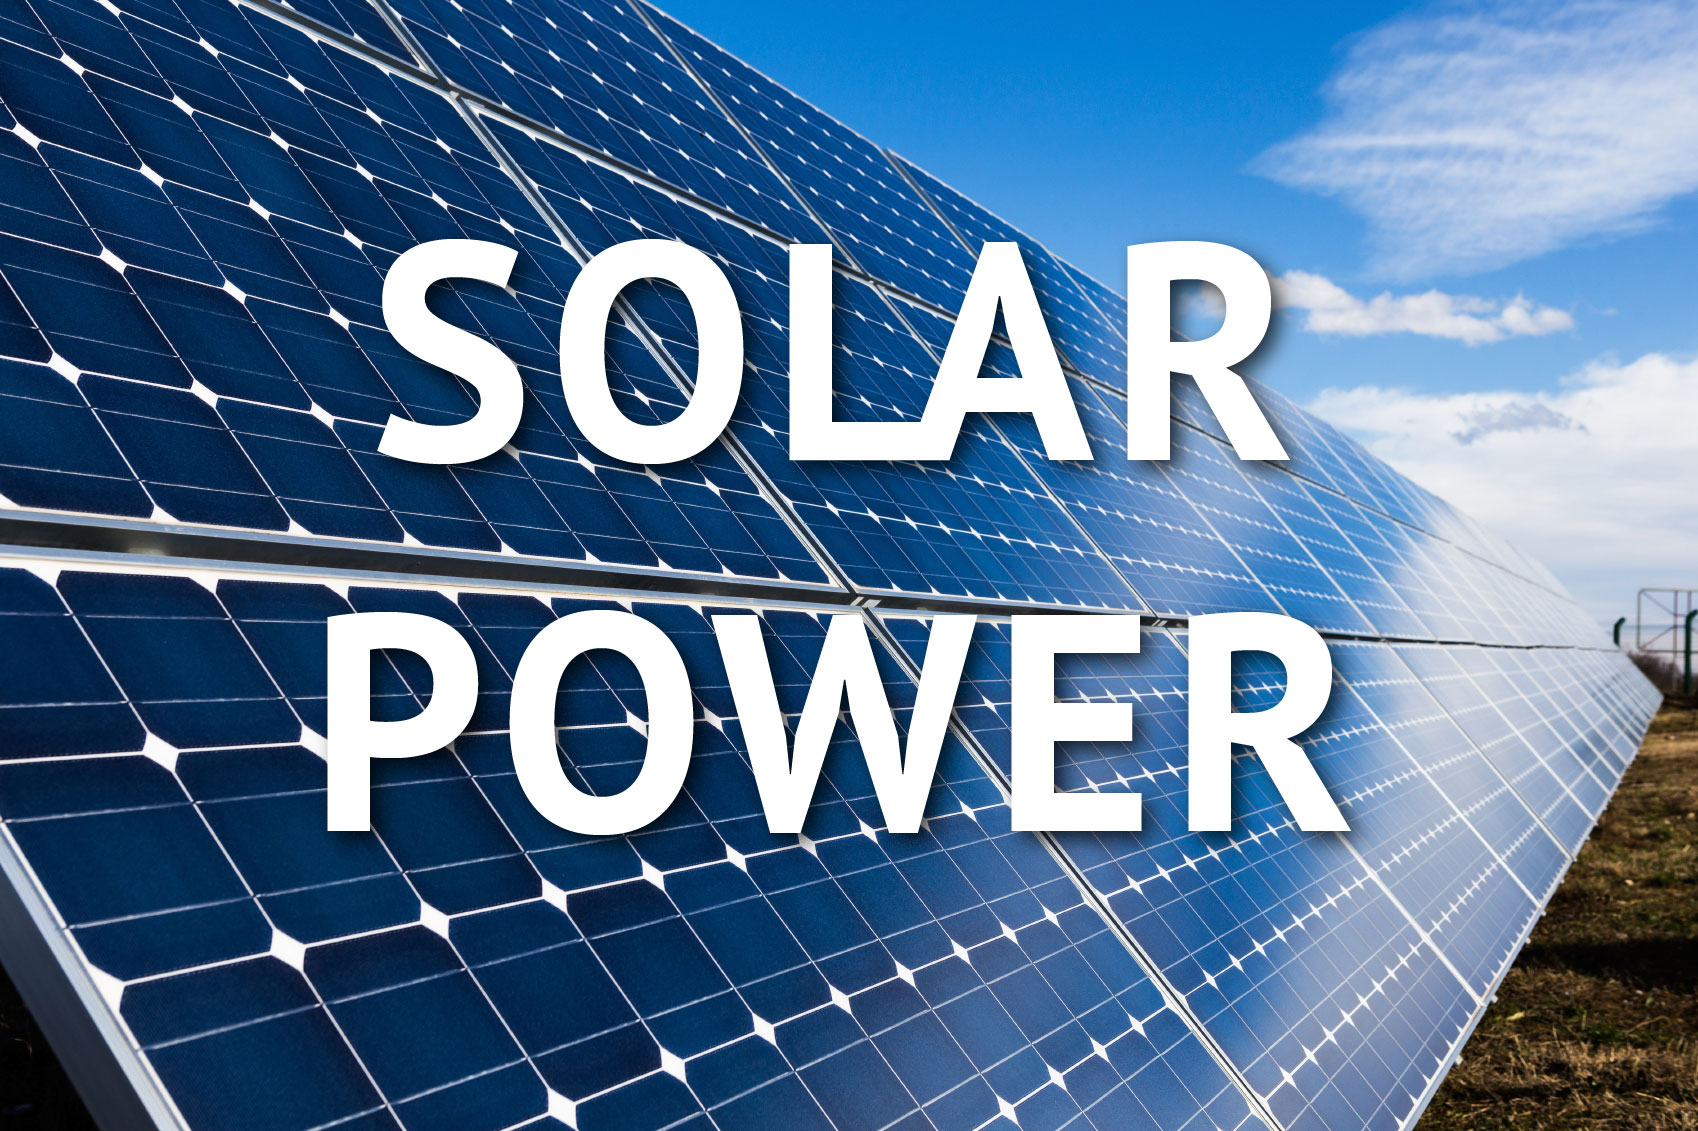 financing solar power advertisement